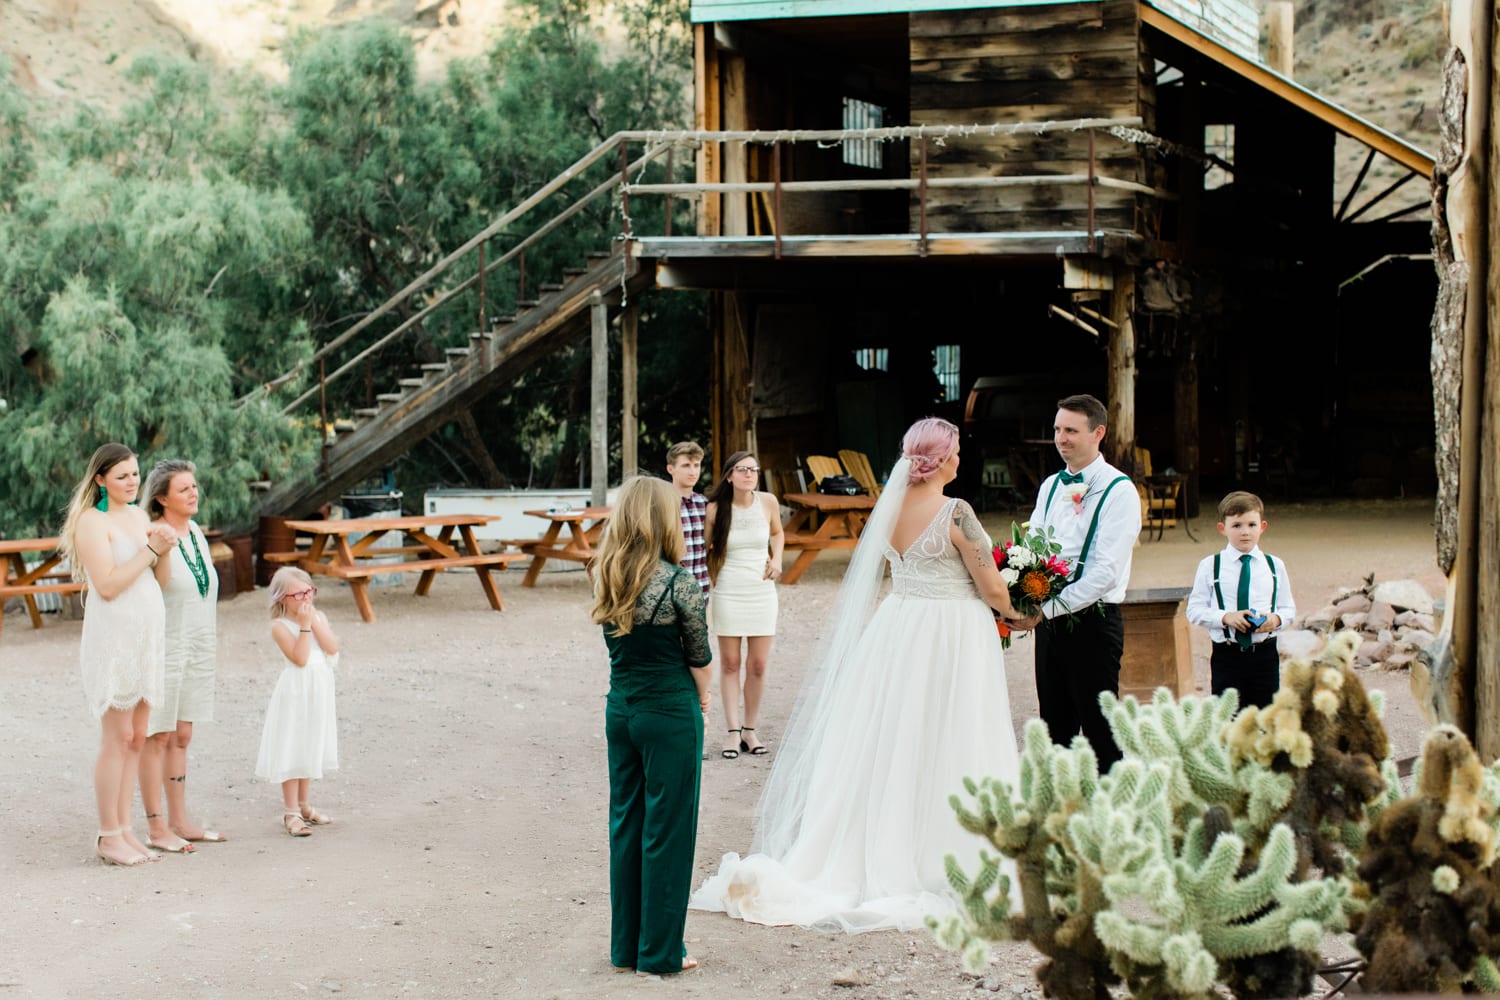 Hayley + Andrew wedding ceremony at Eldorado Canyon.